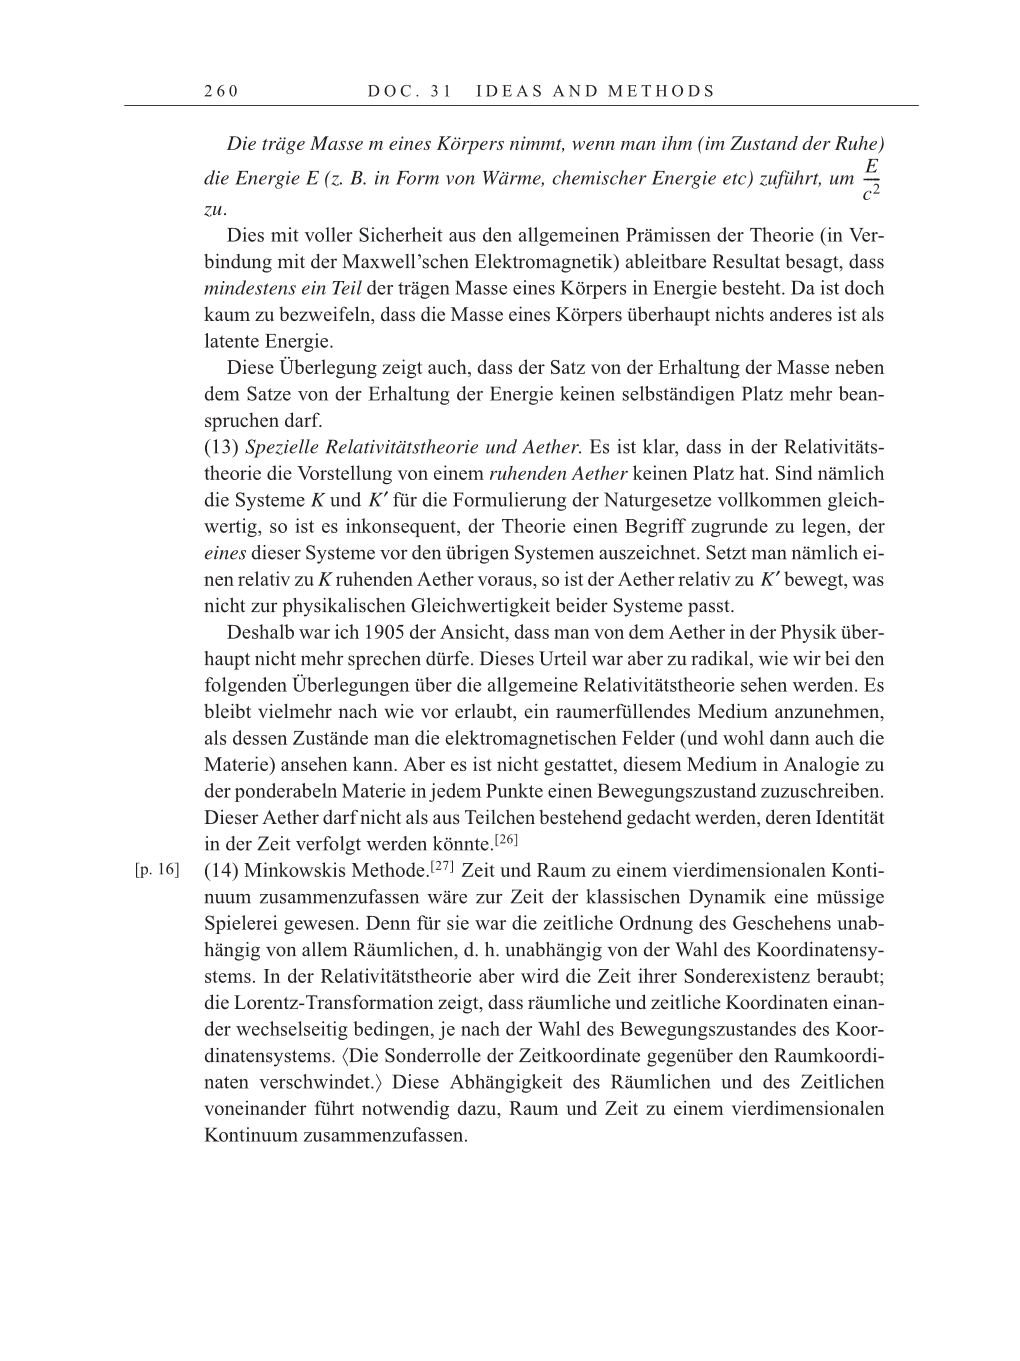 Volume 7: The Berlin Years: Writings, 1918-1921 page 260